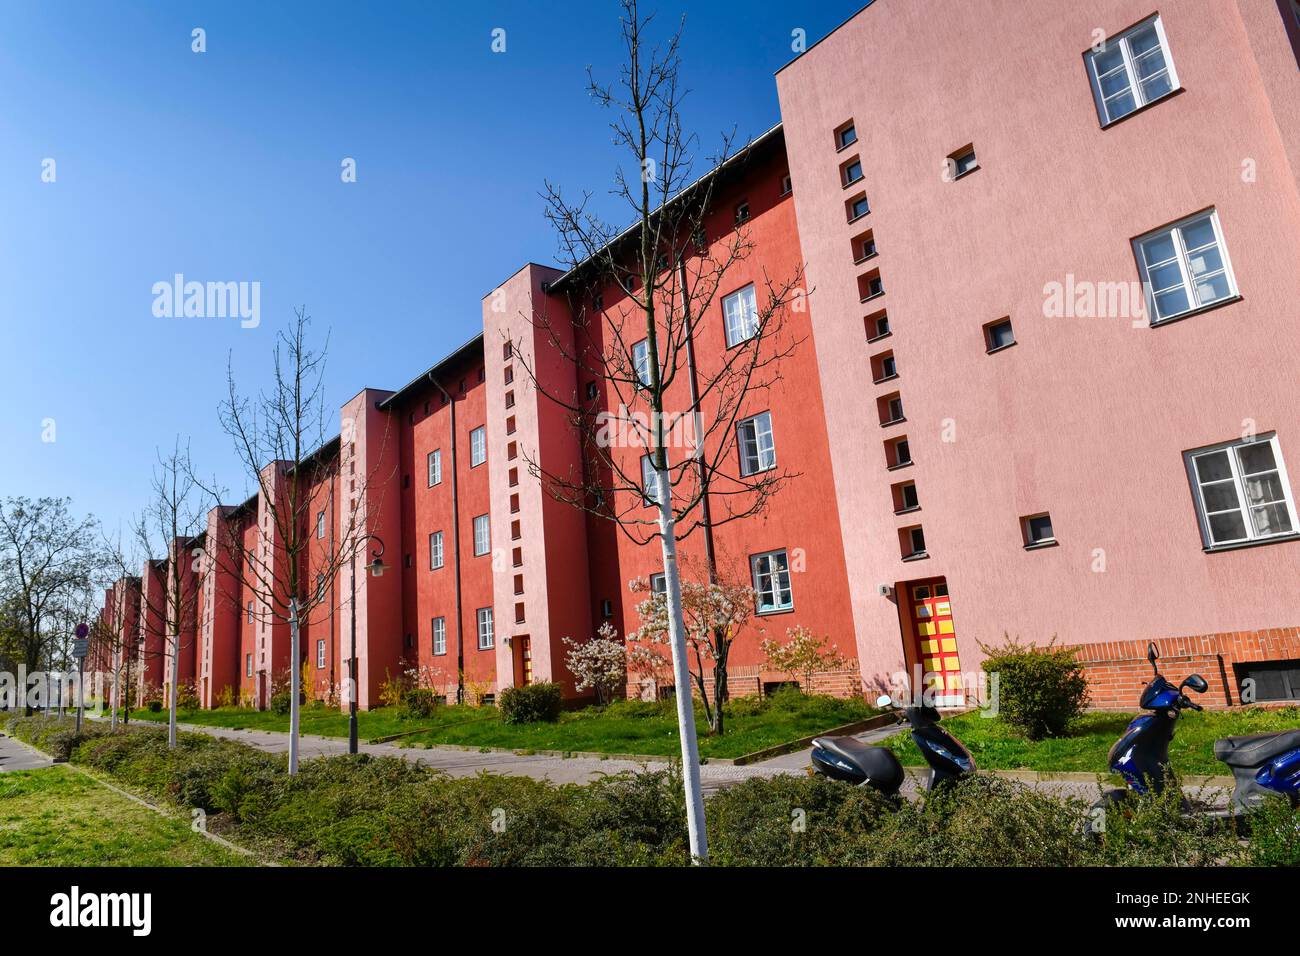 Bâtiments résidentiels, Fritz-Reuter-Allee, Hufeisensiedlung, Britz, Neukoelln, Berlin, Allemagne Banque D'Images